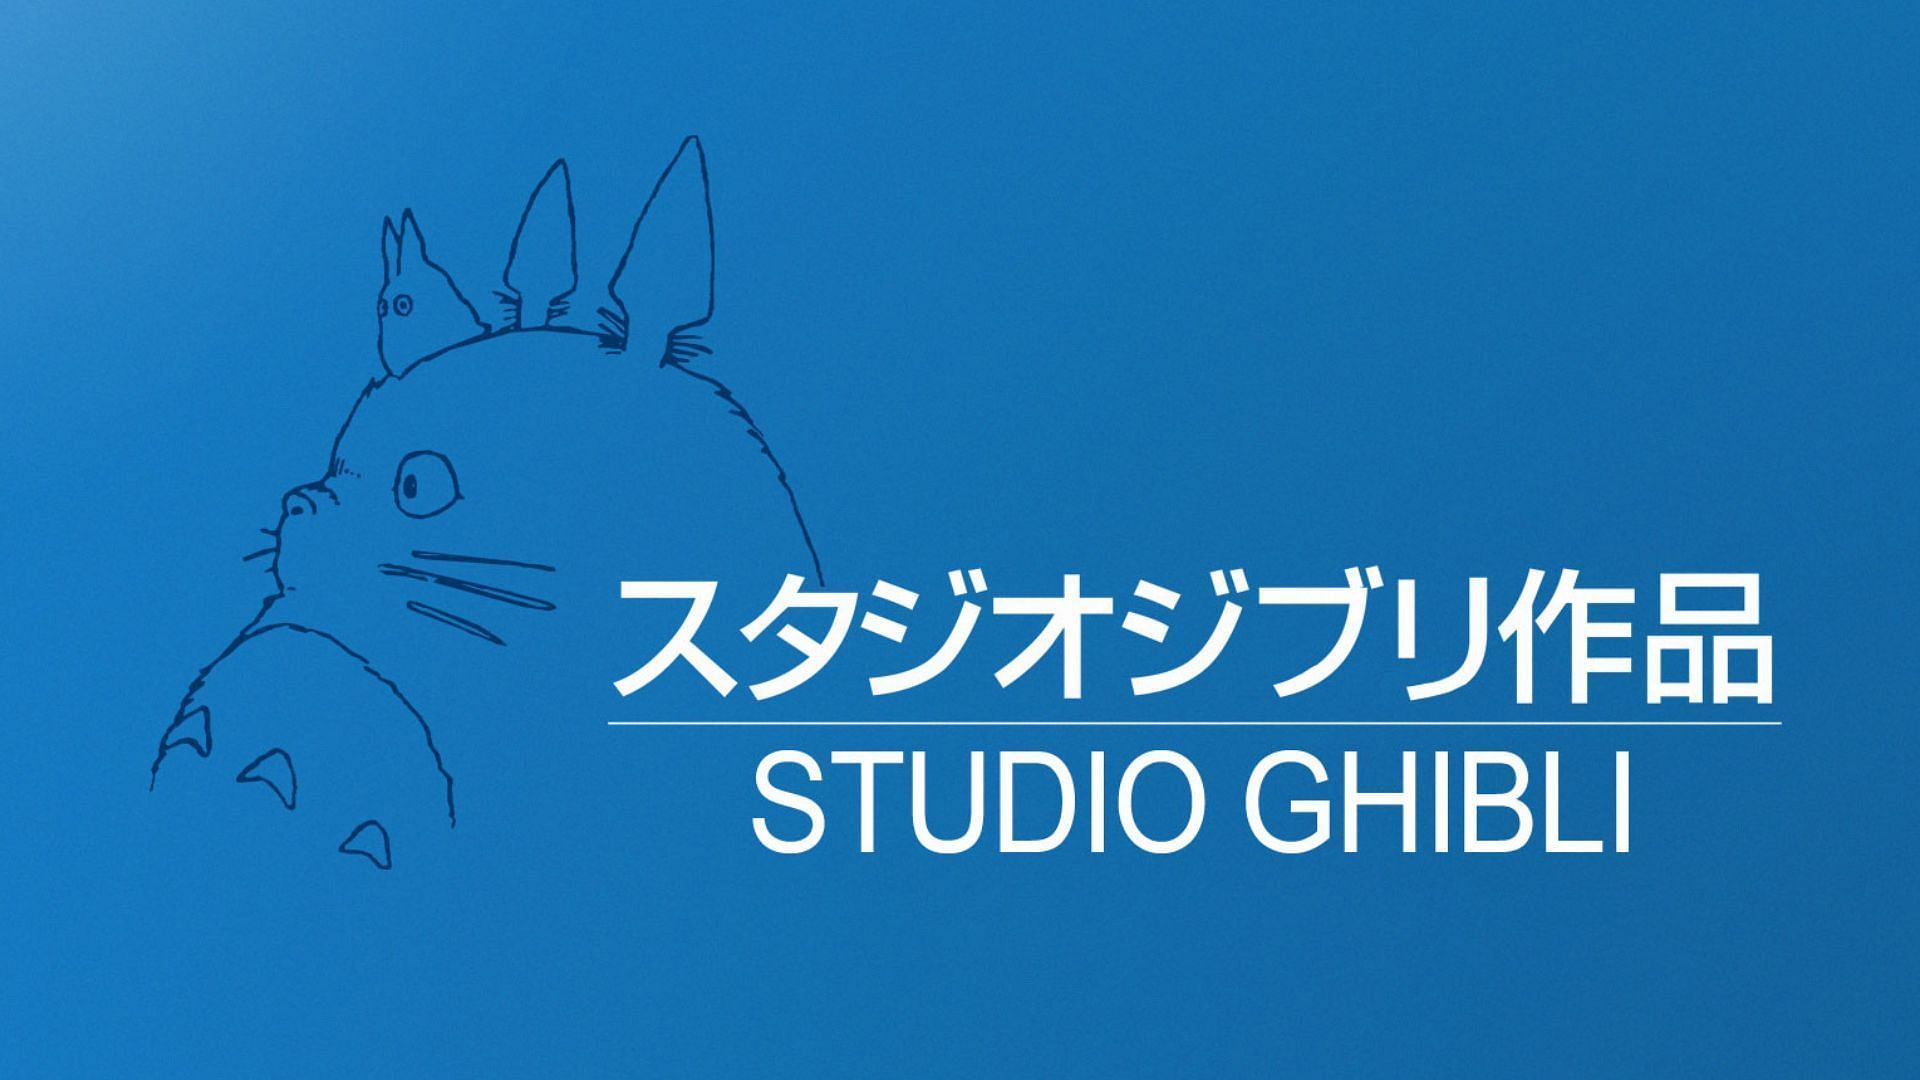 Spirited Away' Maker Studio Ghibli Gets New Lead Shareholder